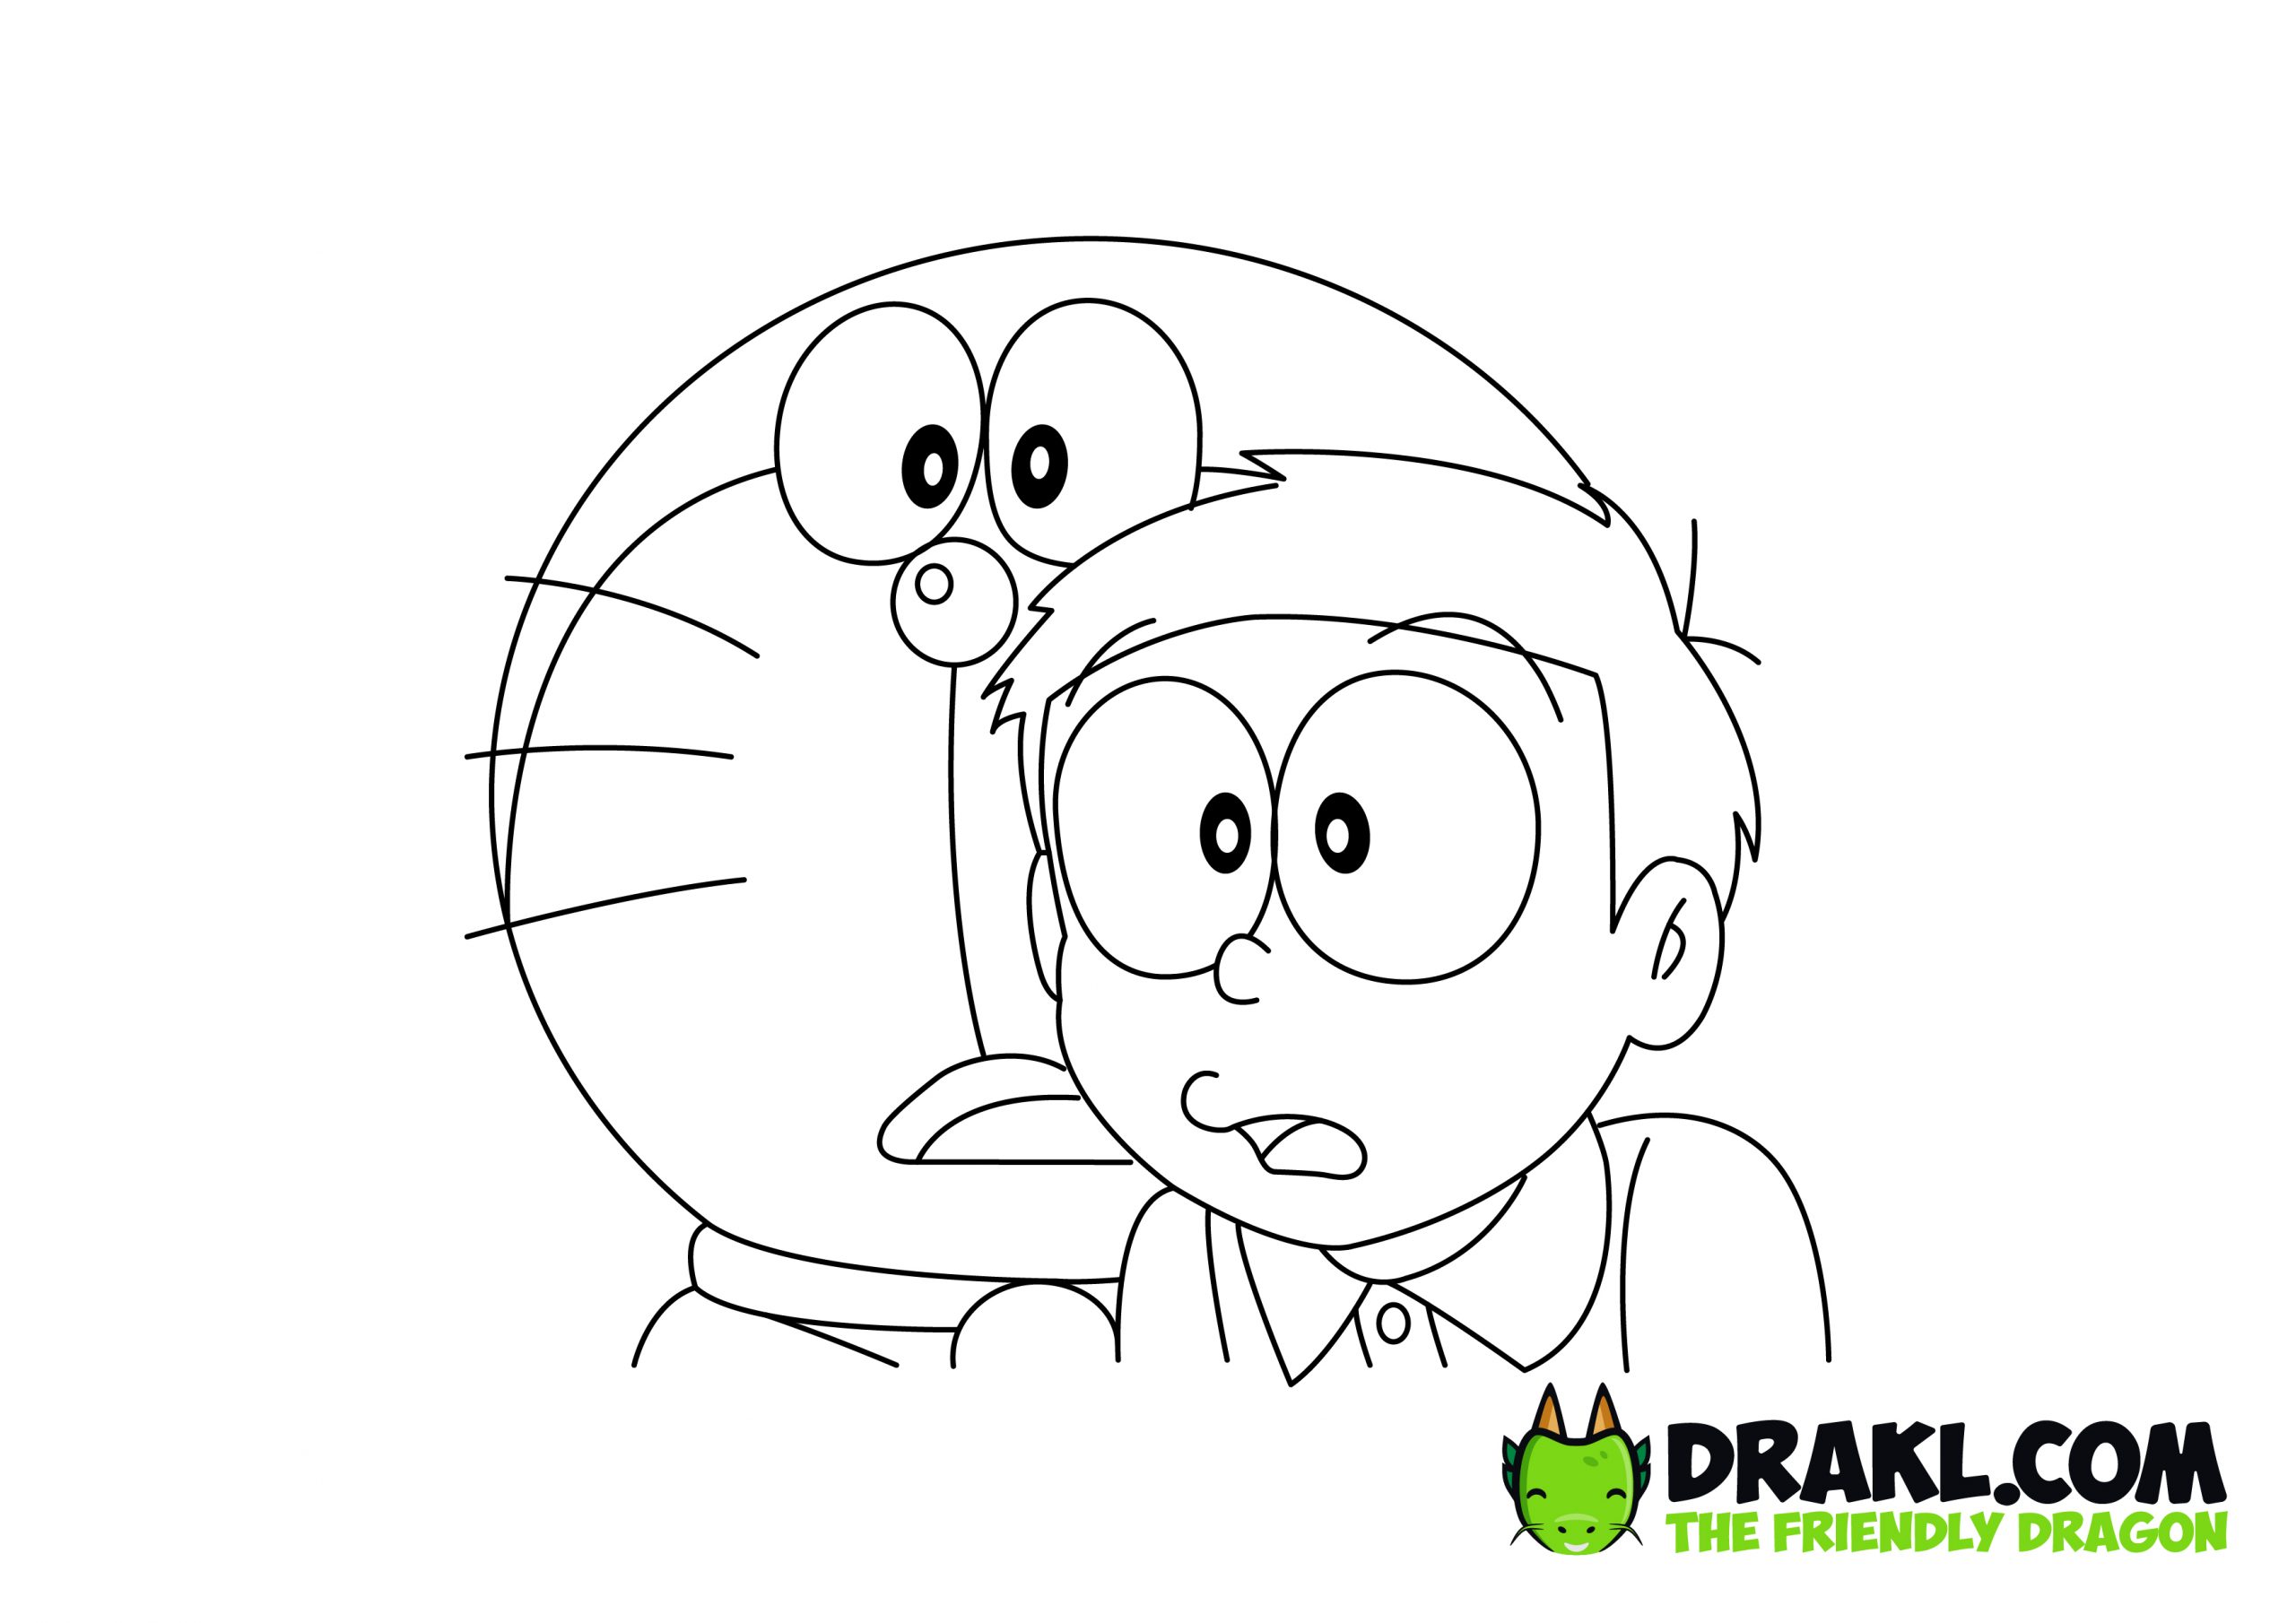 Doraemon Coloring Page - DRAKL